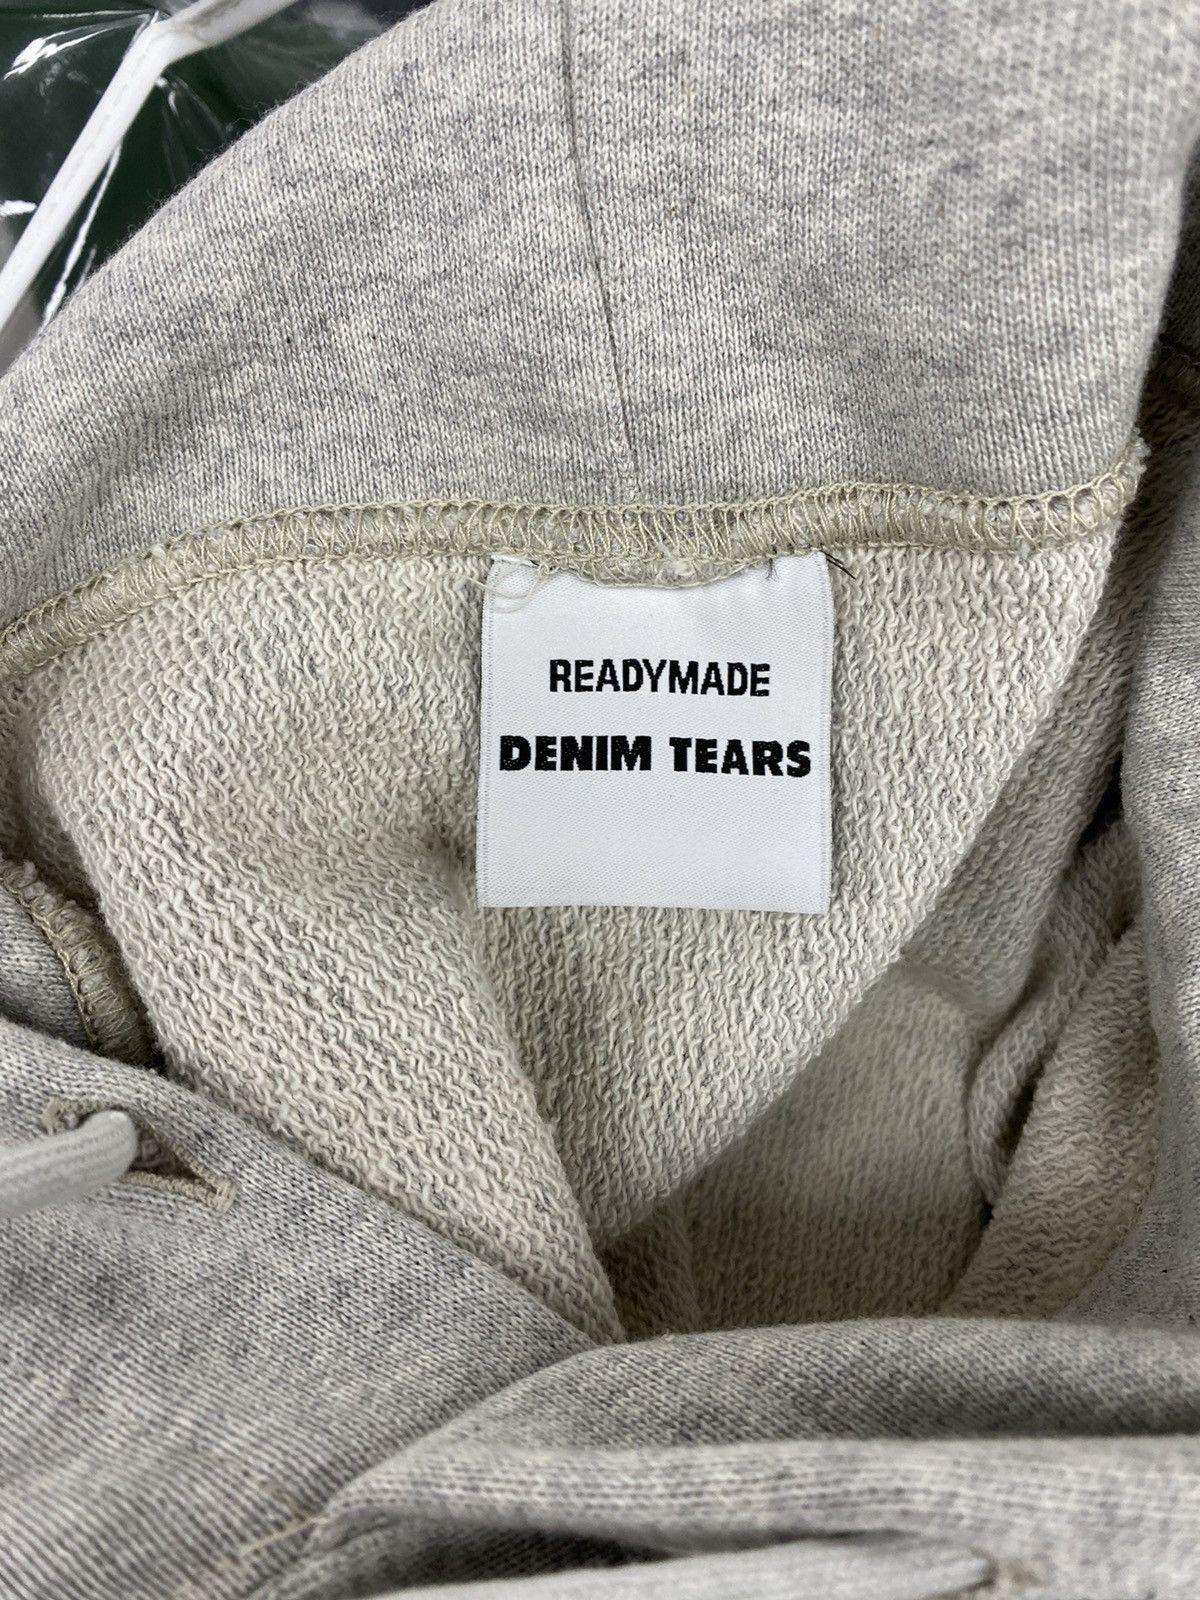 READYMADE Readymade x Denim Tears cotton wreath hoodie grey small Size US S / EU 44-46 / 1 - 11 Thumbnail